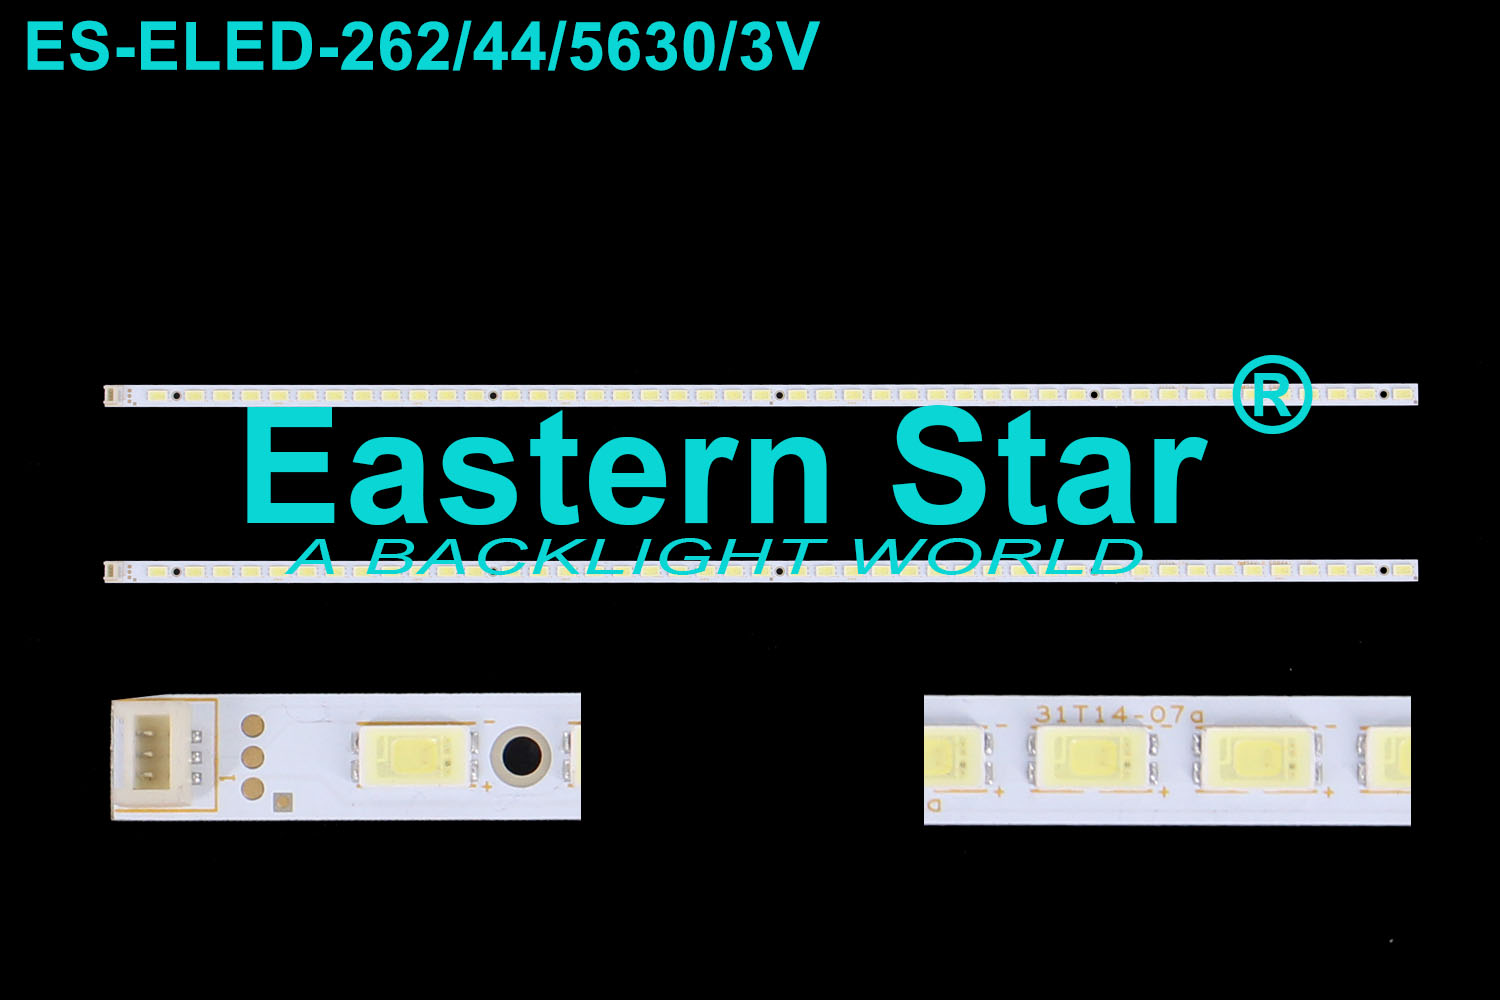 ES-ELED-262 ELED/EDGE TV backlight use for Haier 32" 44LEDs backlight strips 31T14-07A HAIER LE32A700P LED STRIPS(2)